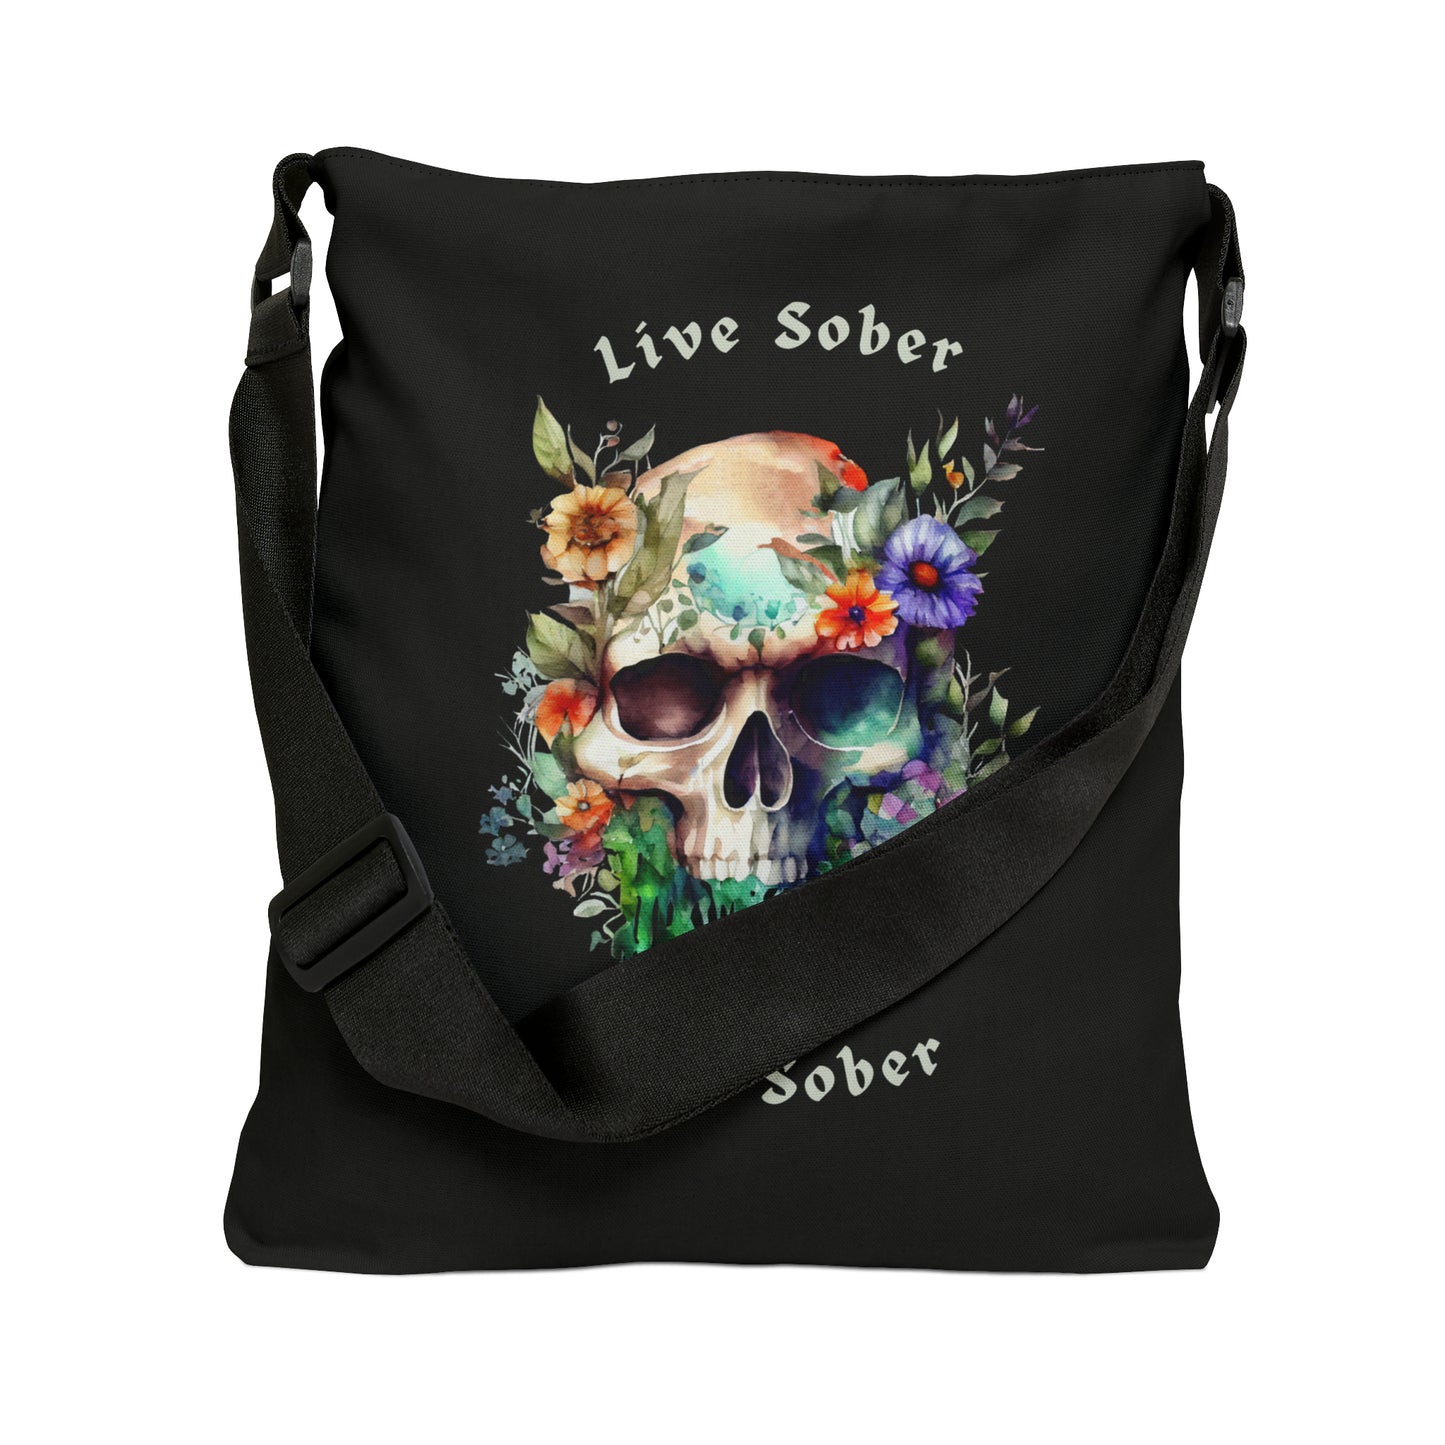 Live Sober Love Sober travel bag